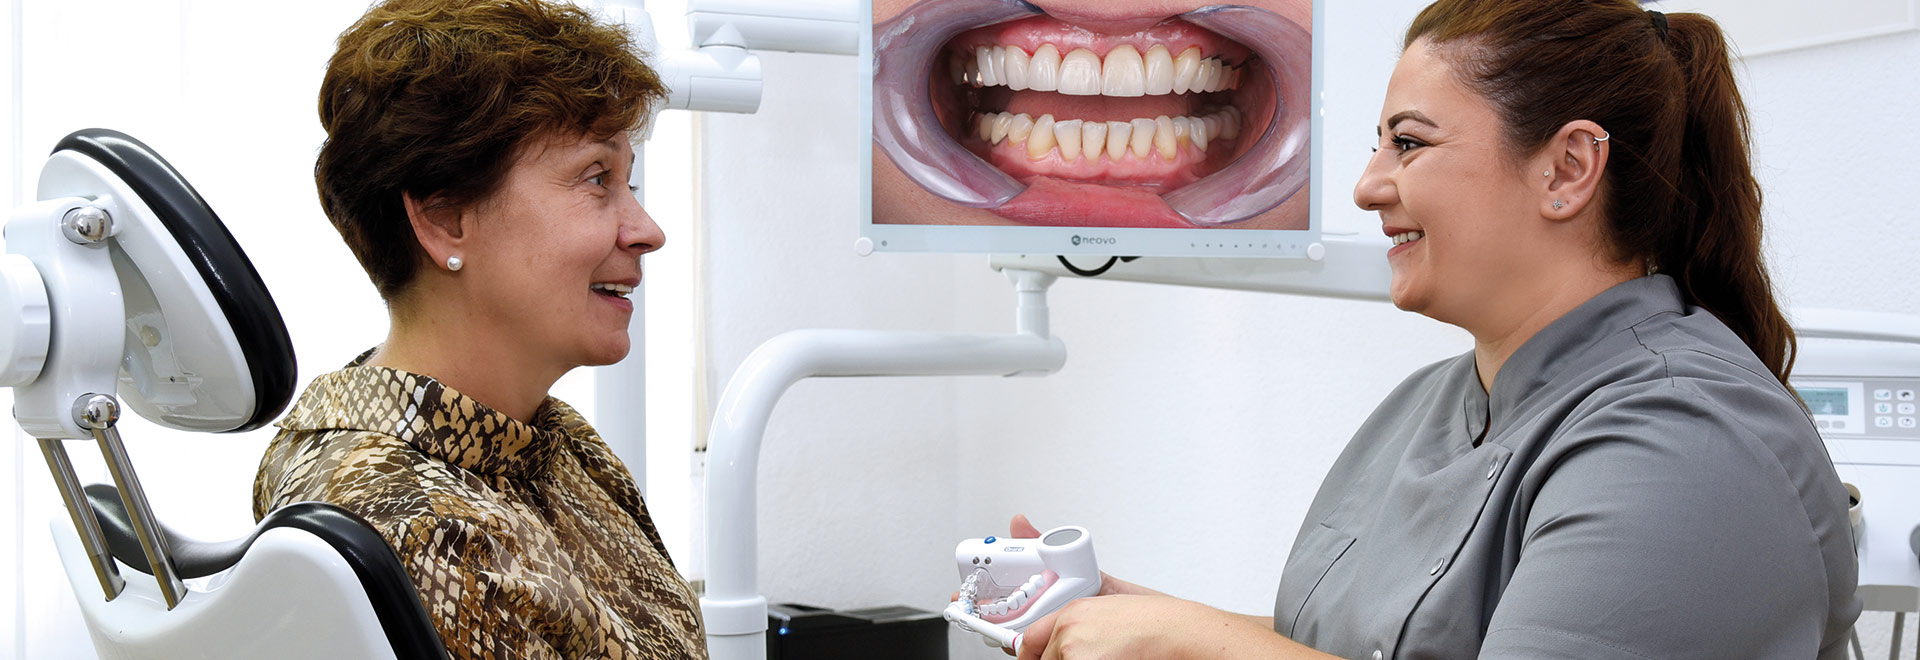 Parodontitisbehandlung